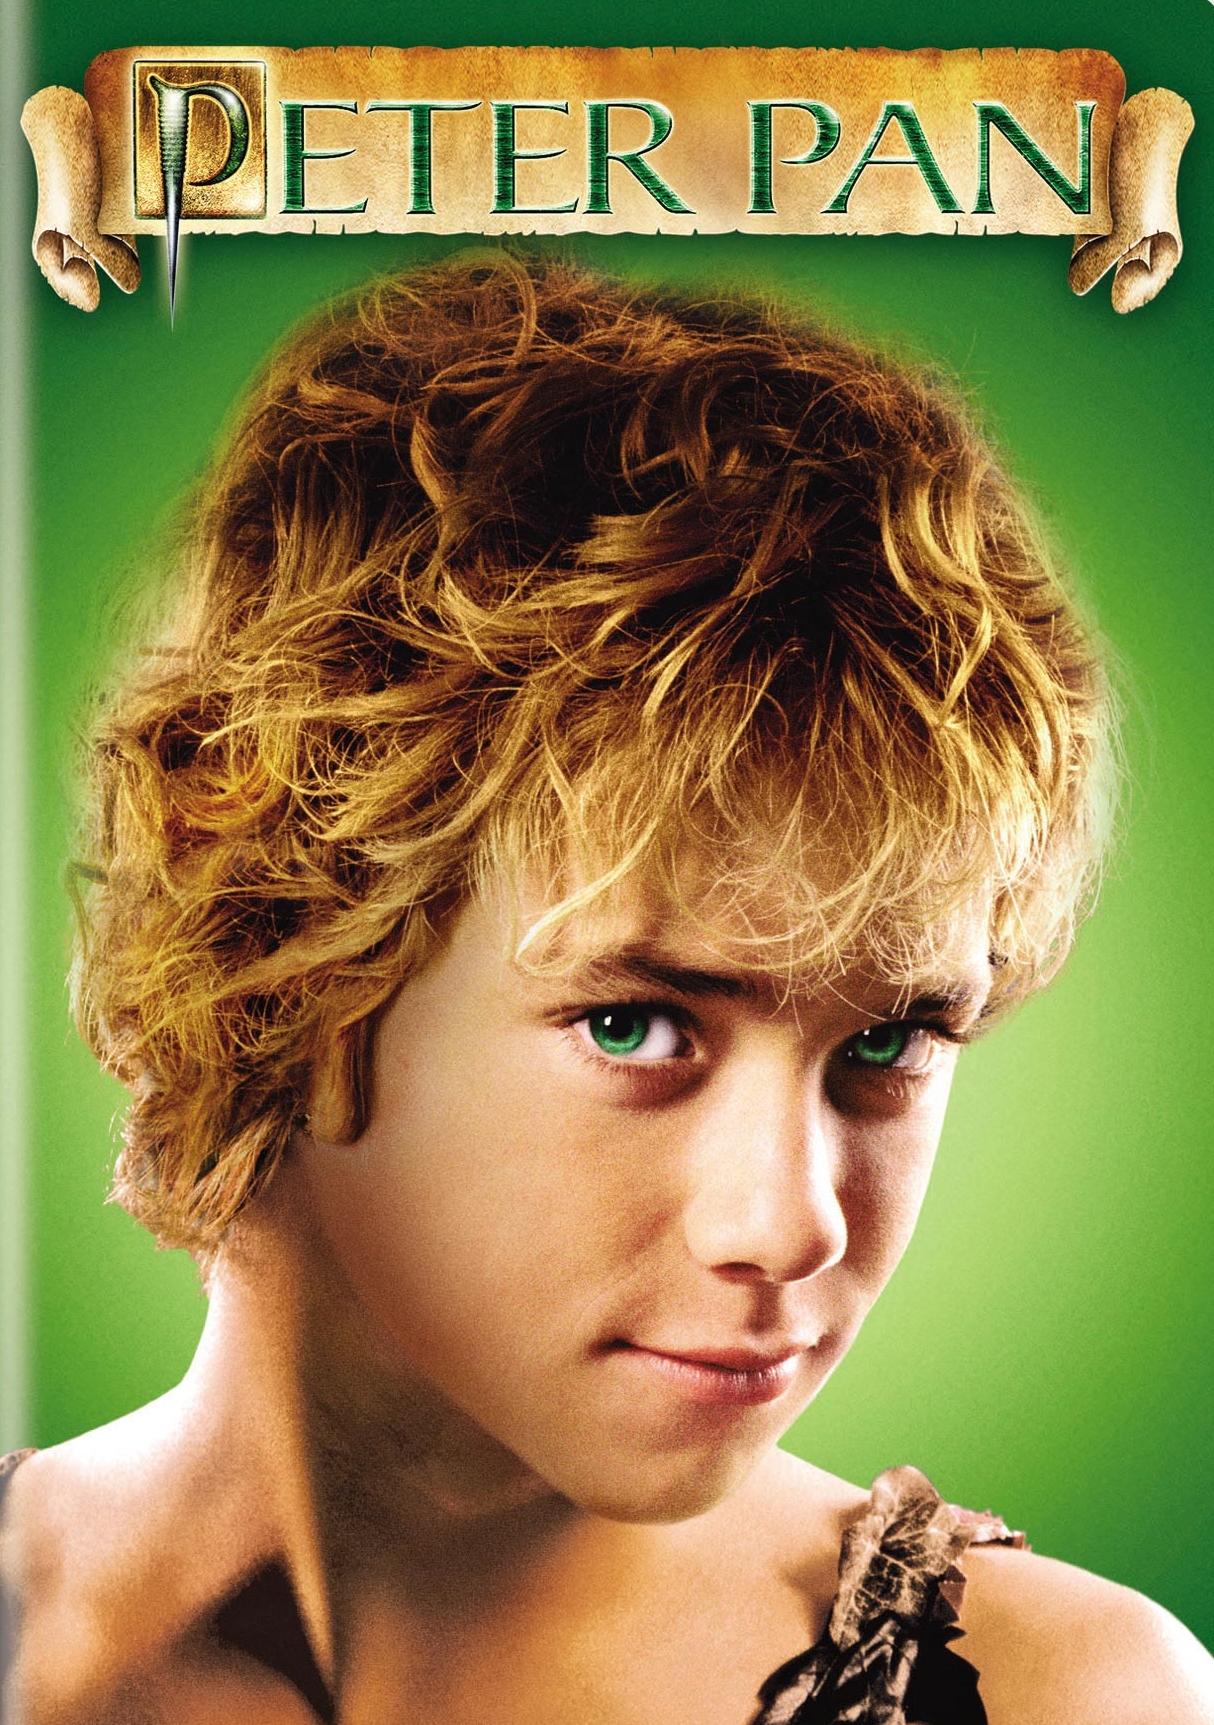 Peter Pan [DVD] [2003] - Best Buy